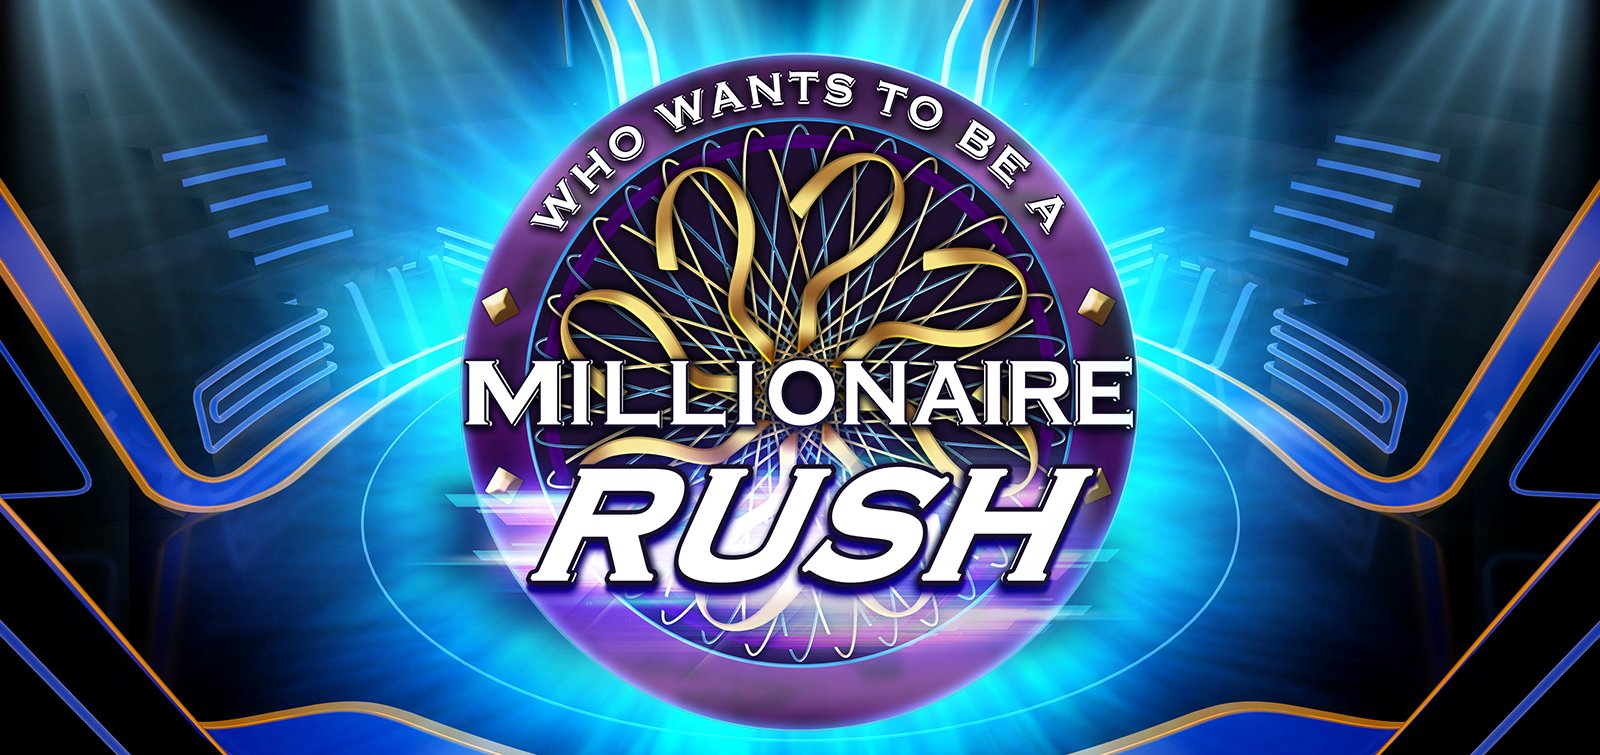 Millionaire Rush Slot